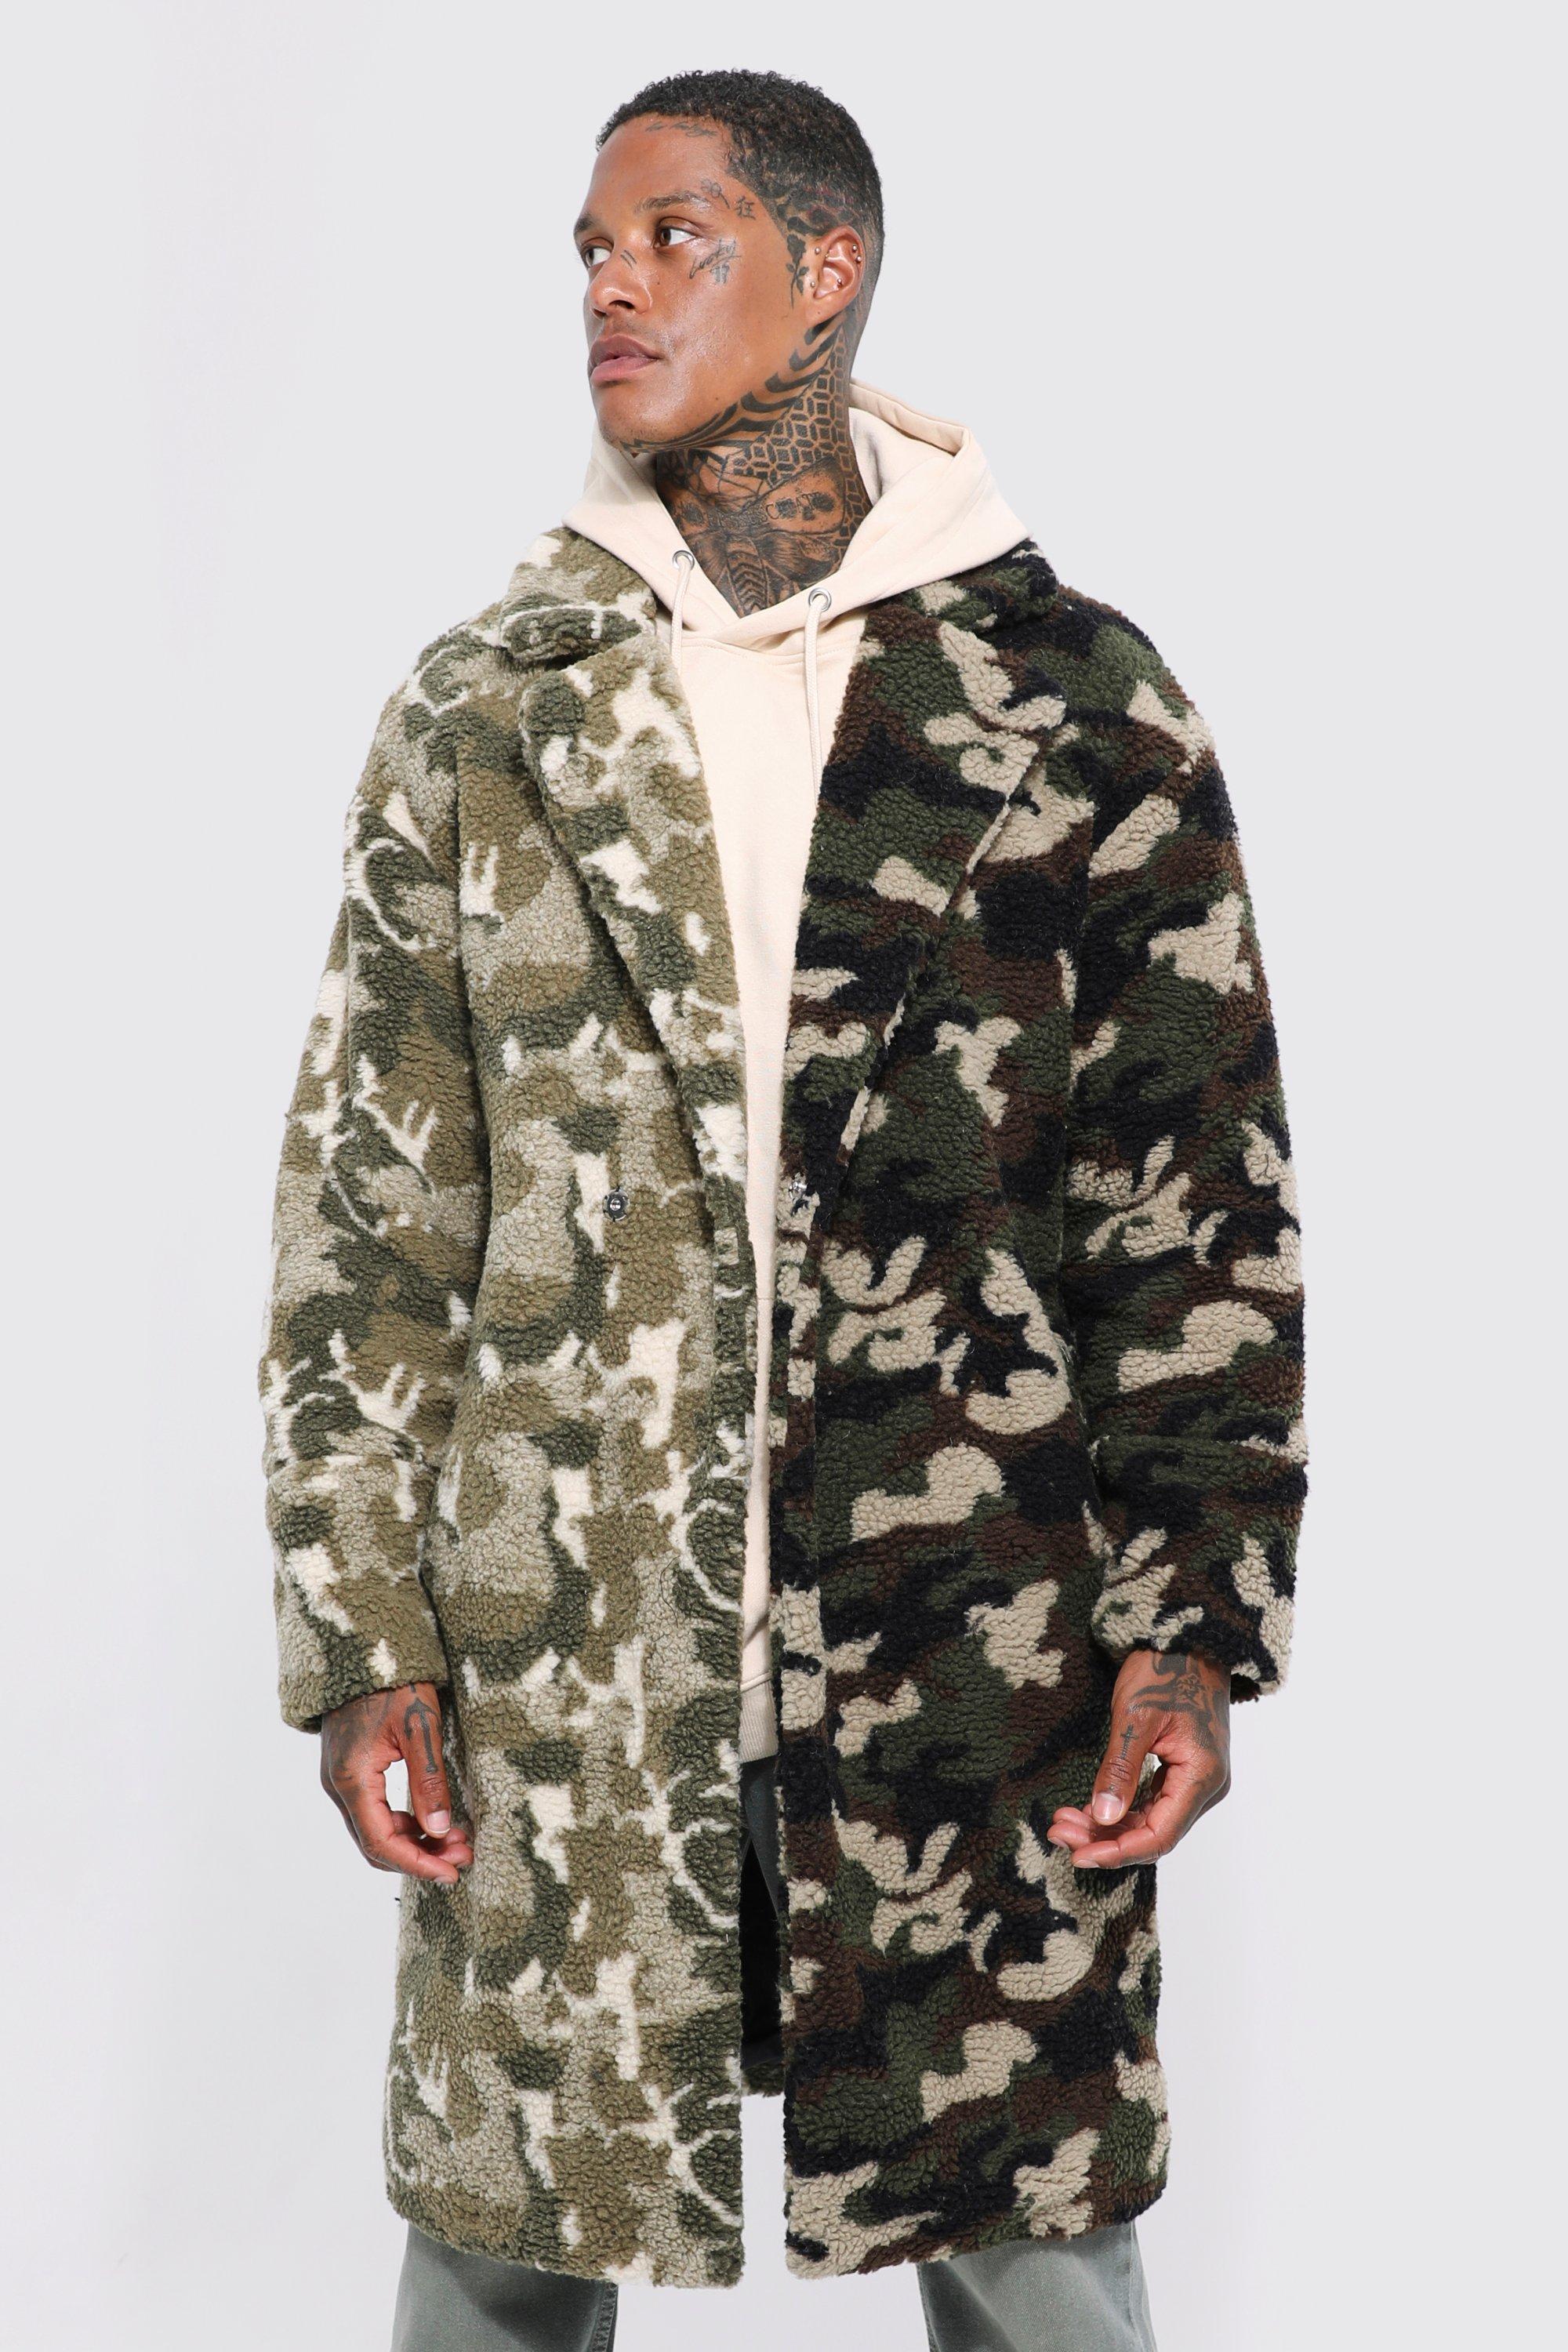 manteau long bicolore effet camouflage en polaire homme - kaki - xs, kaki